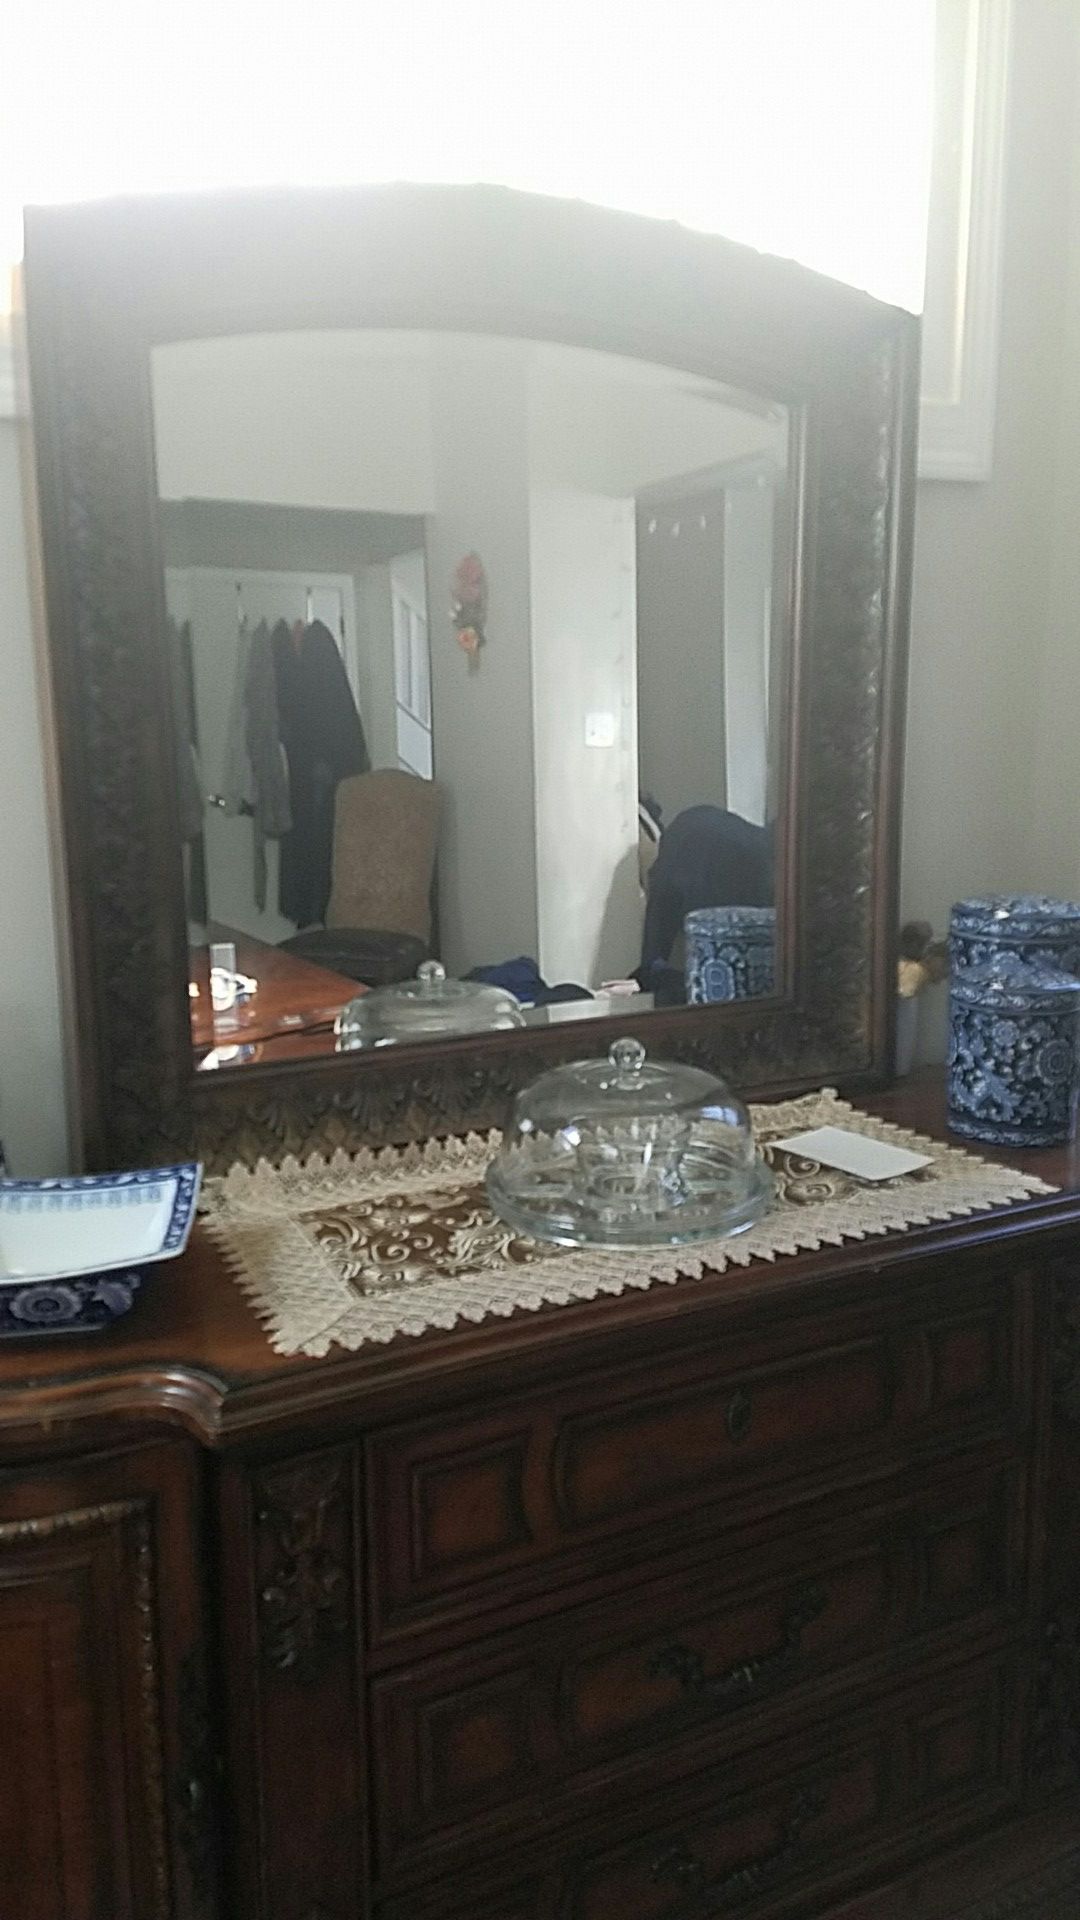 Dining, mirror and dresser set